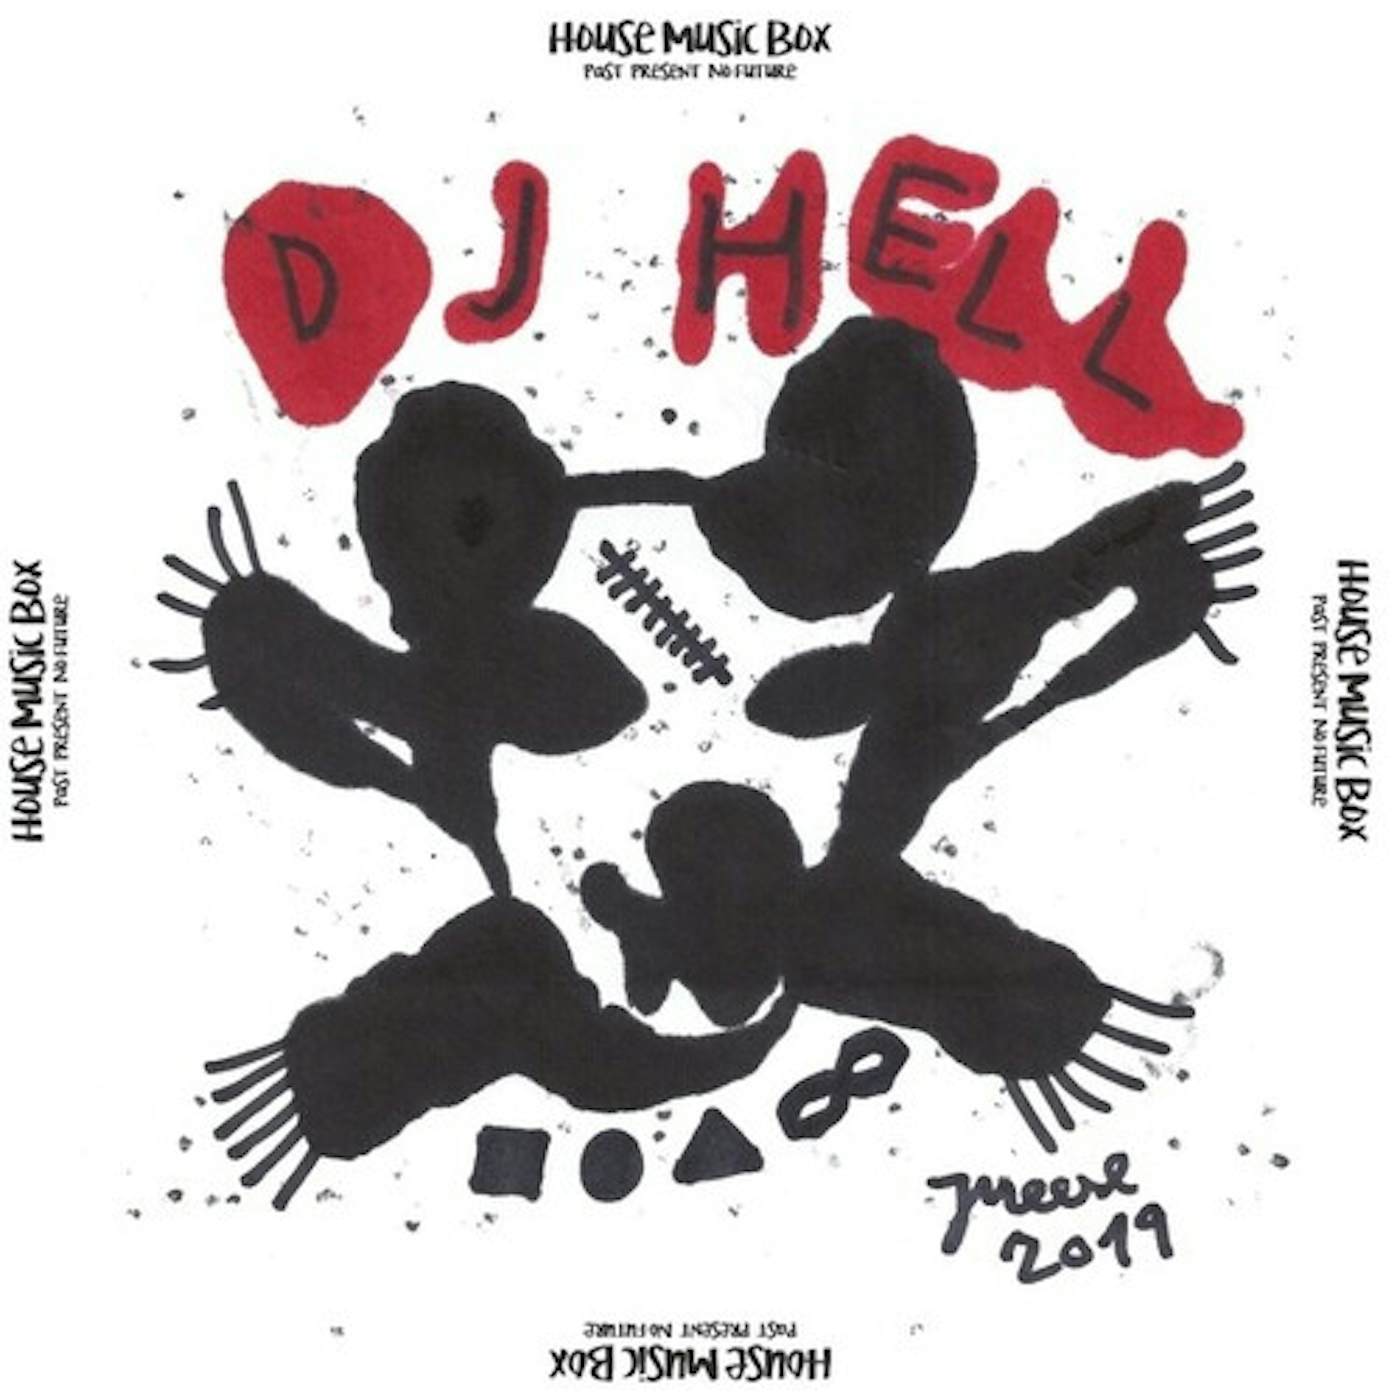 DJ Hell HOUSE MUSIC BOX (PAST, PRESENT, NO FUTURE) CD